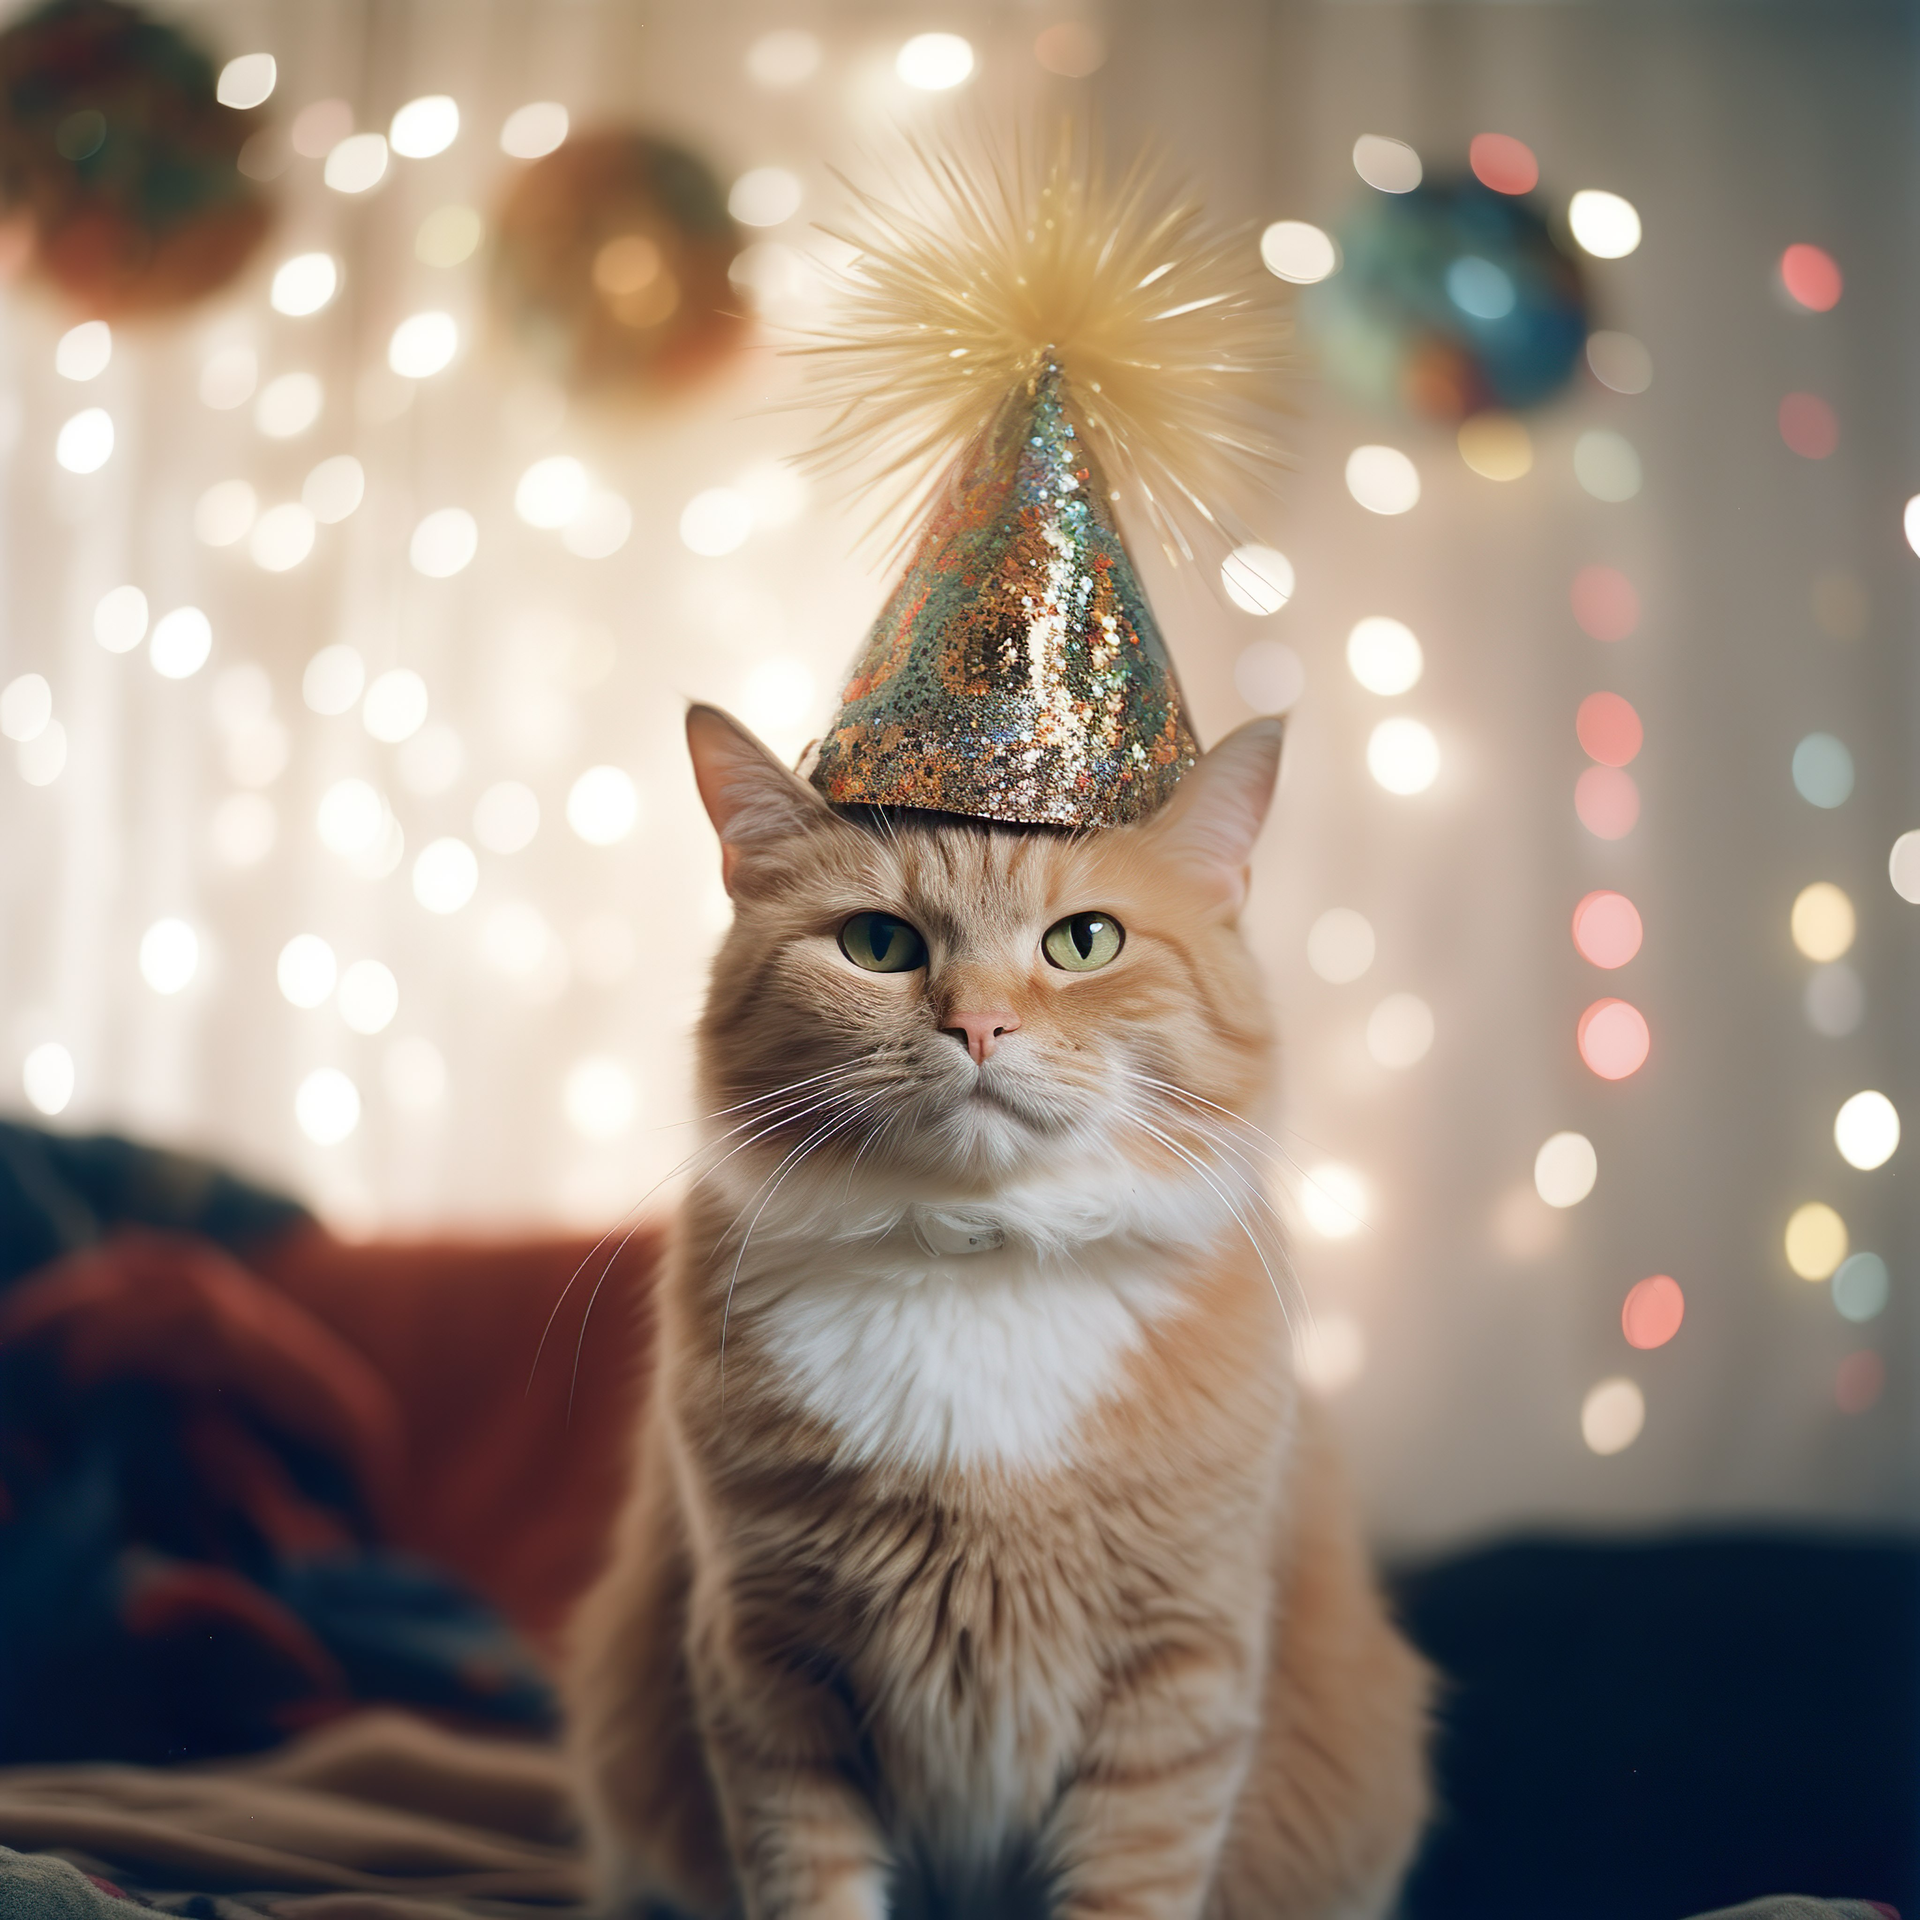 Orange cat with party hat